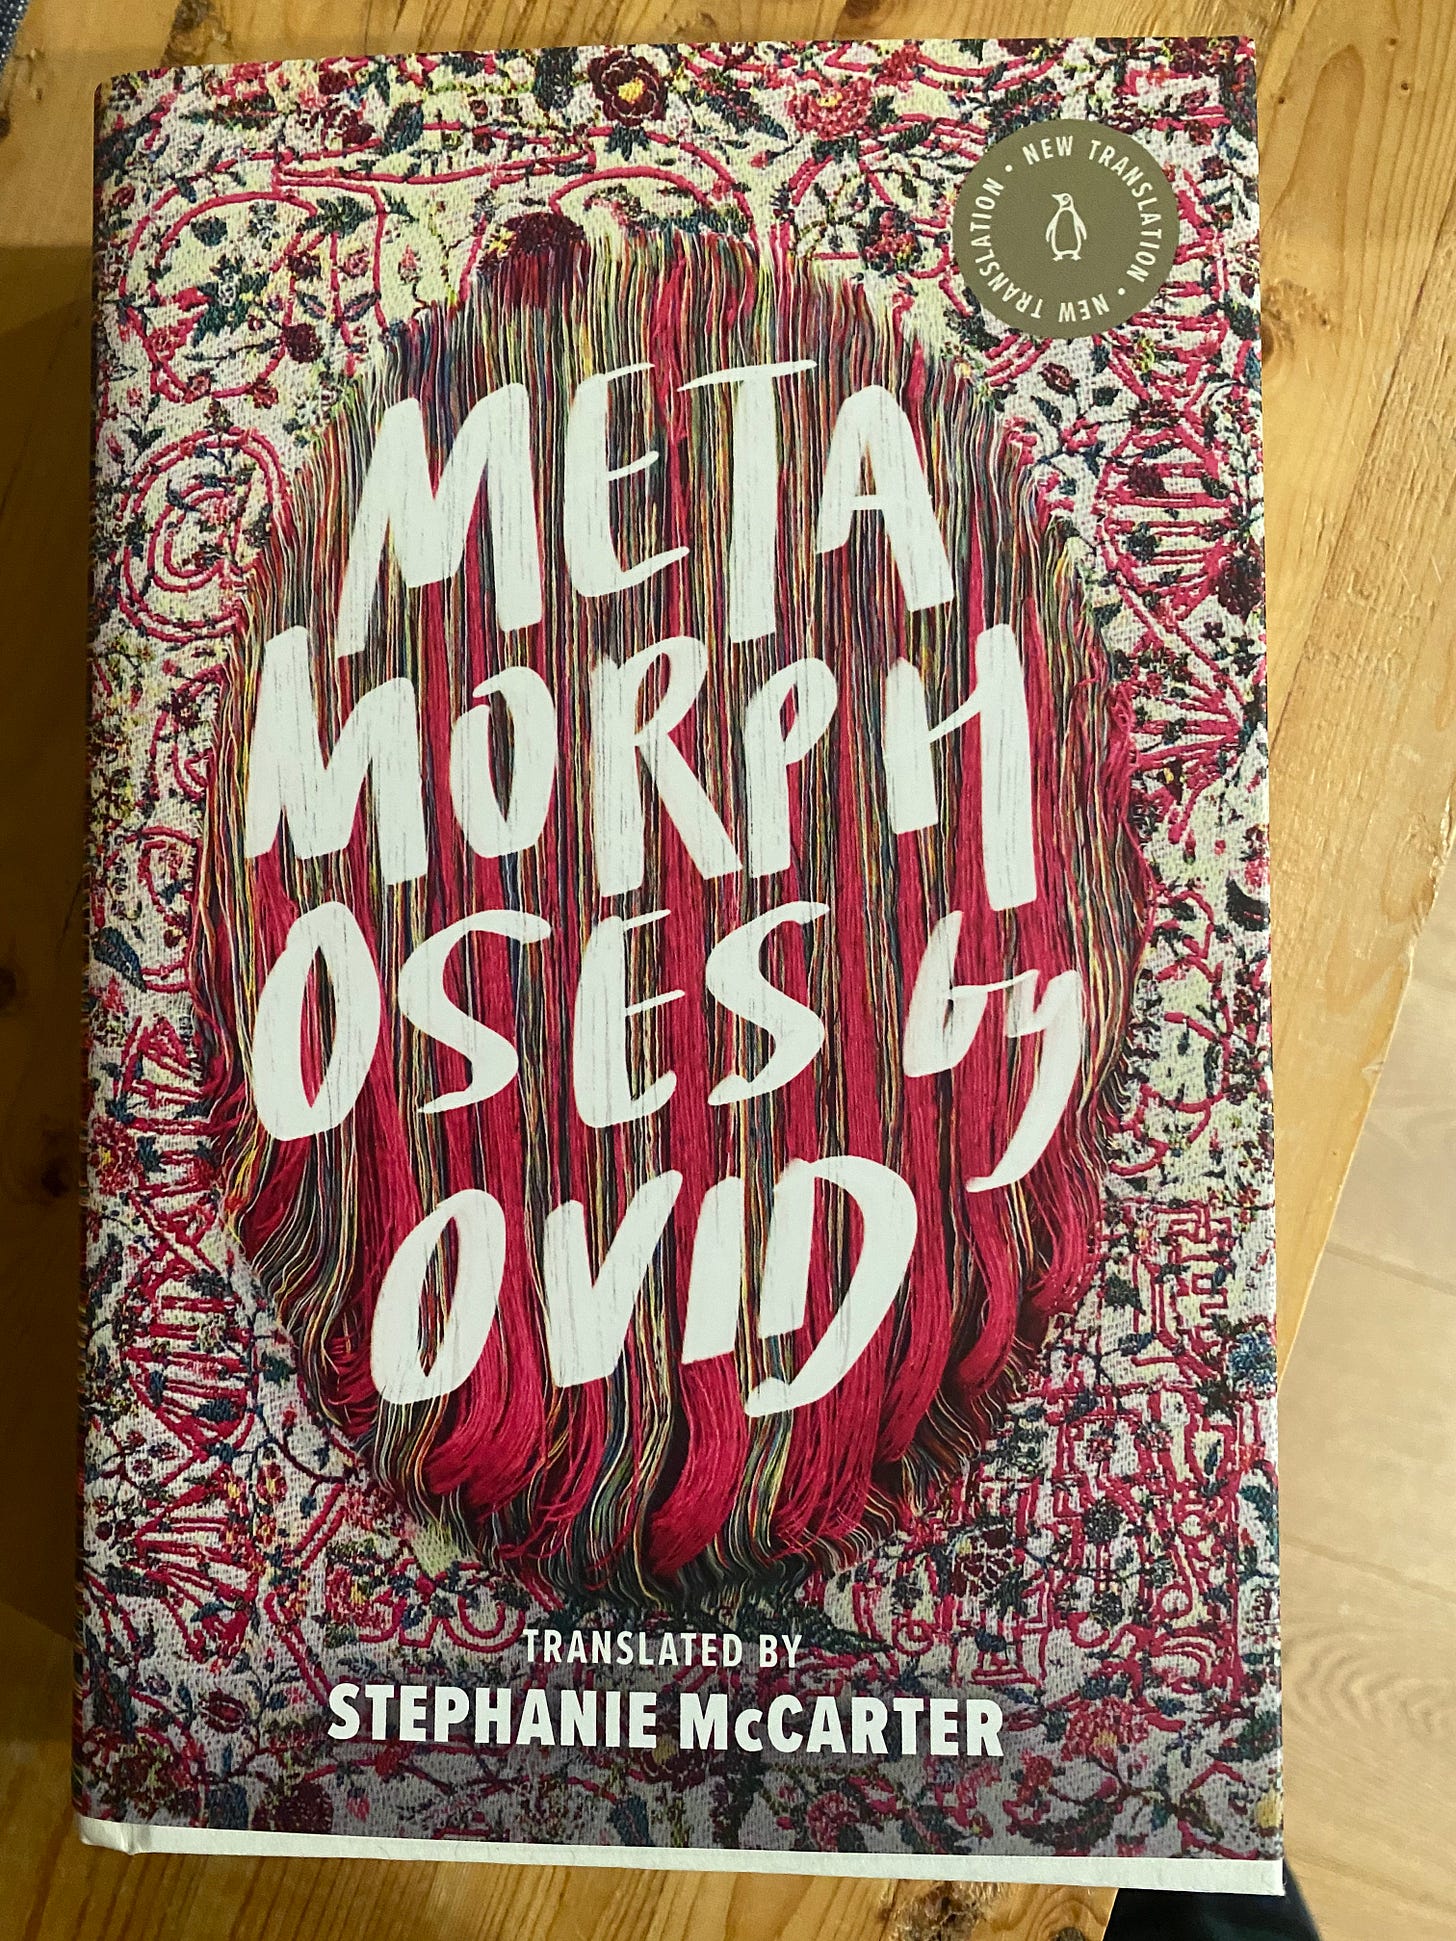 Stephanie McCarter's new translation of Ovid's Metamorphoses